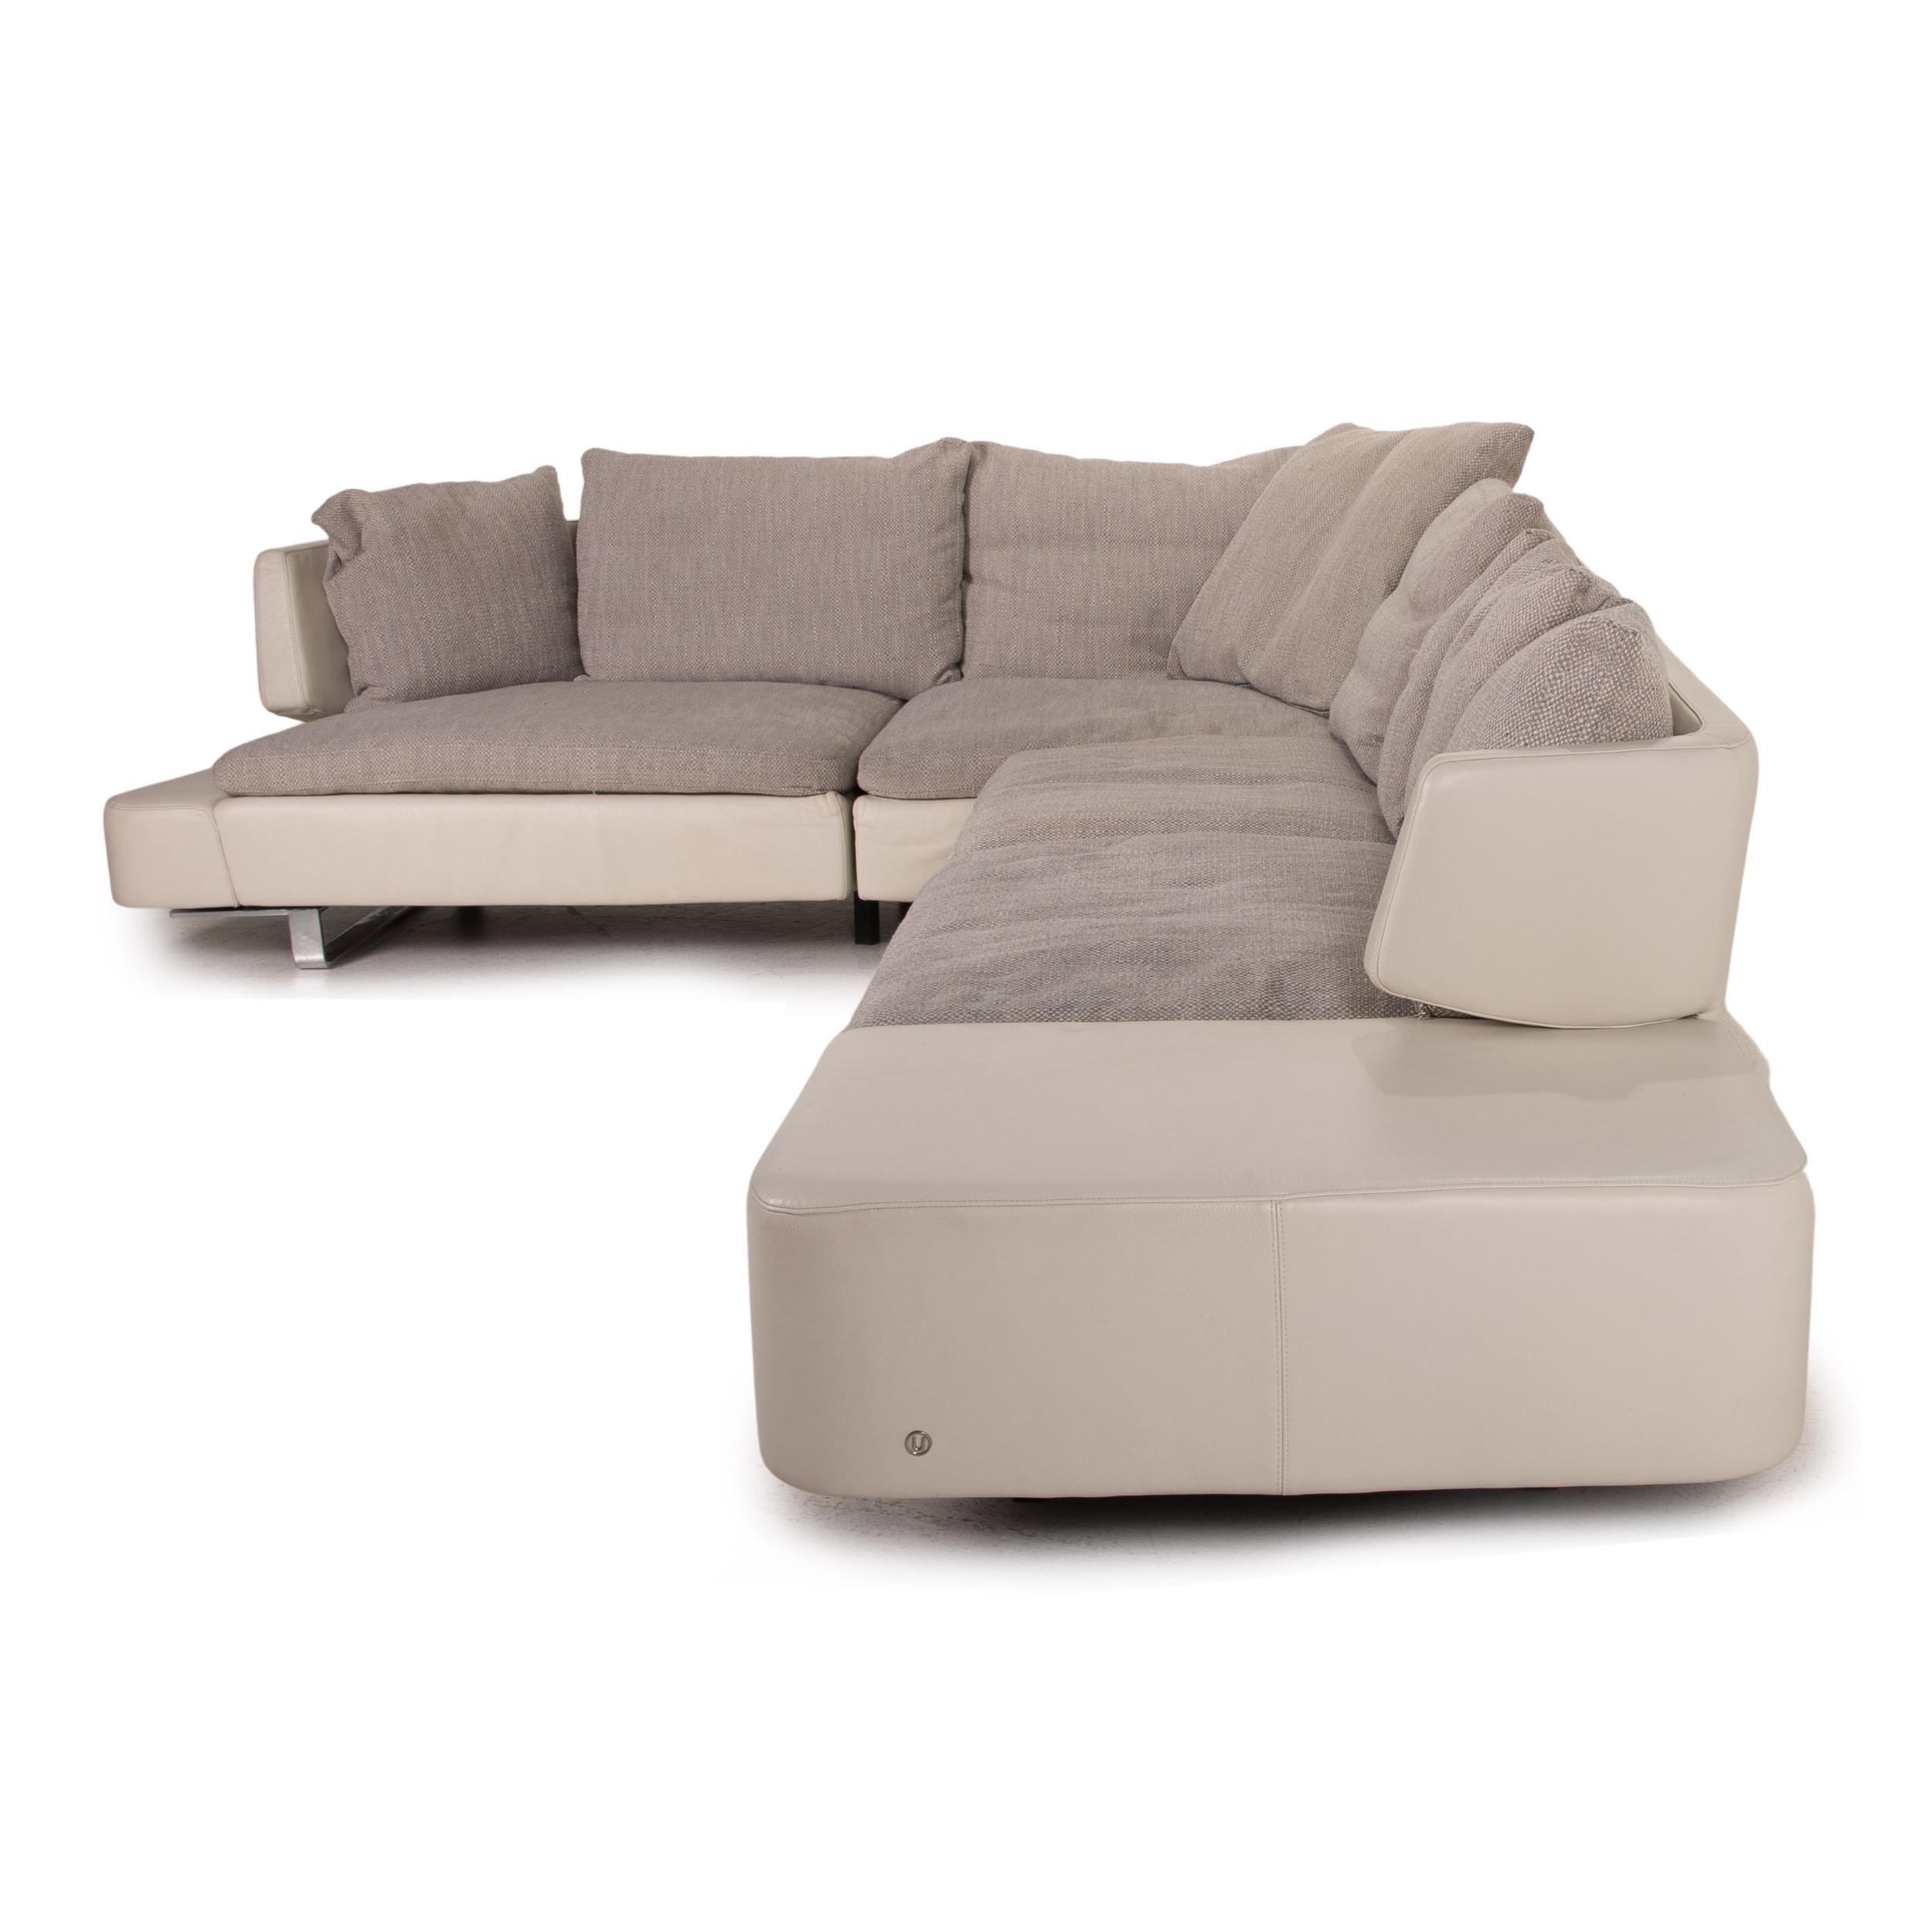 Natuzzi Opus Leather Fabric Corner Sofa Gray Cream Sofa Couch For Sale 5